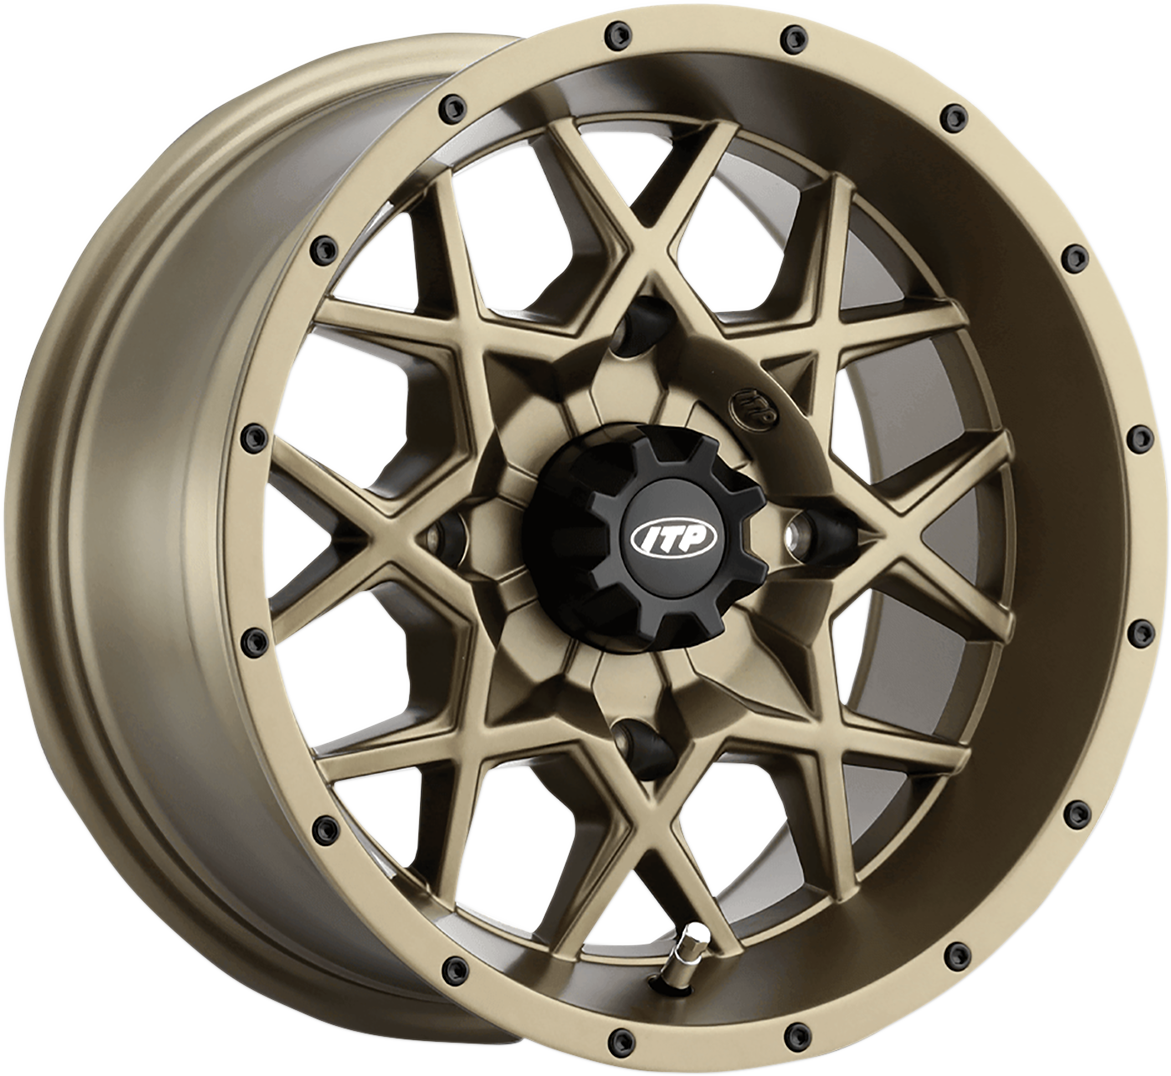 ITP Wheel - Hurricane - Front/Rear - Bronze - 15x7 - 4/156 - 4+3 1528644729B